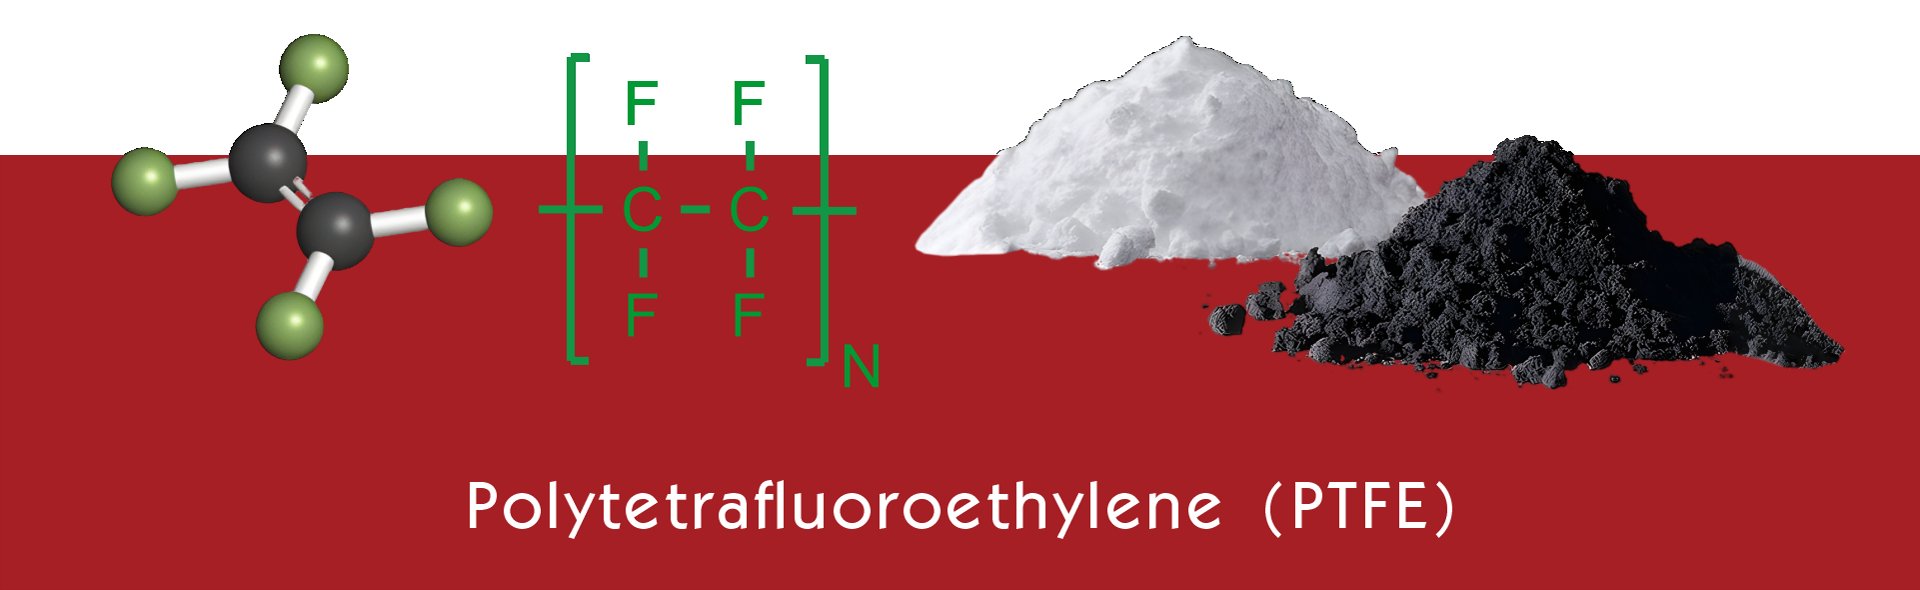 Polytetrafluoroethylene (PTFE)